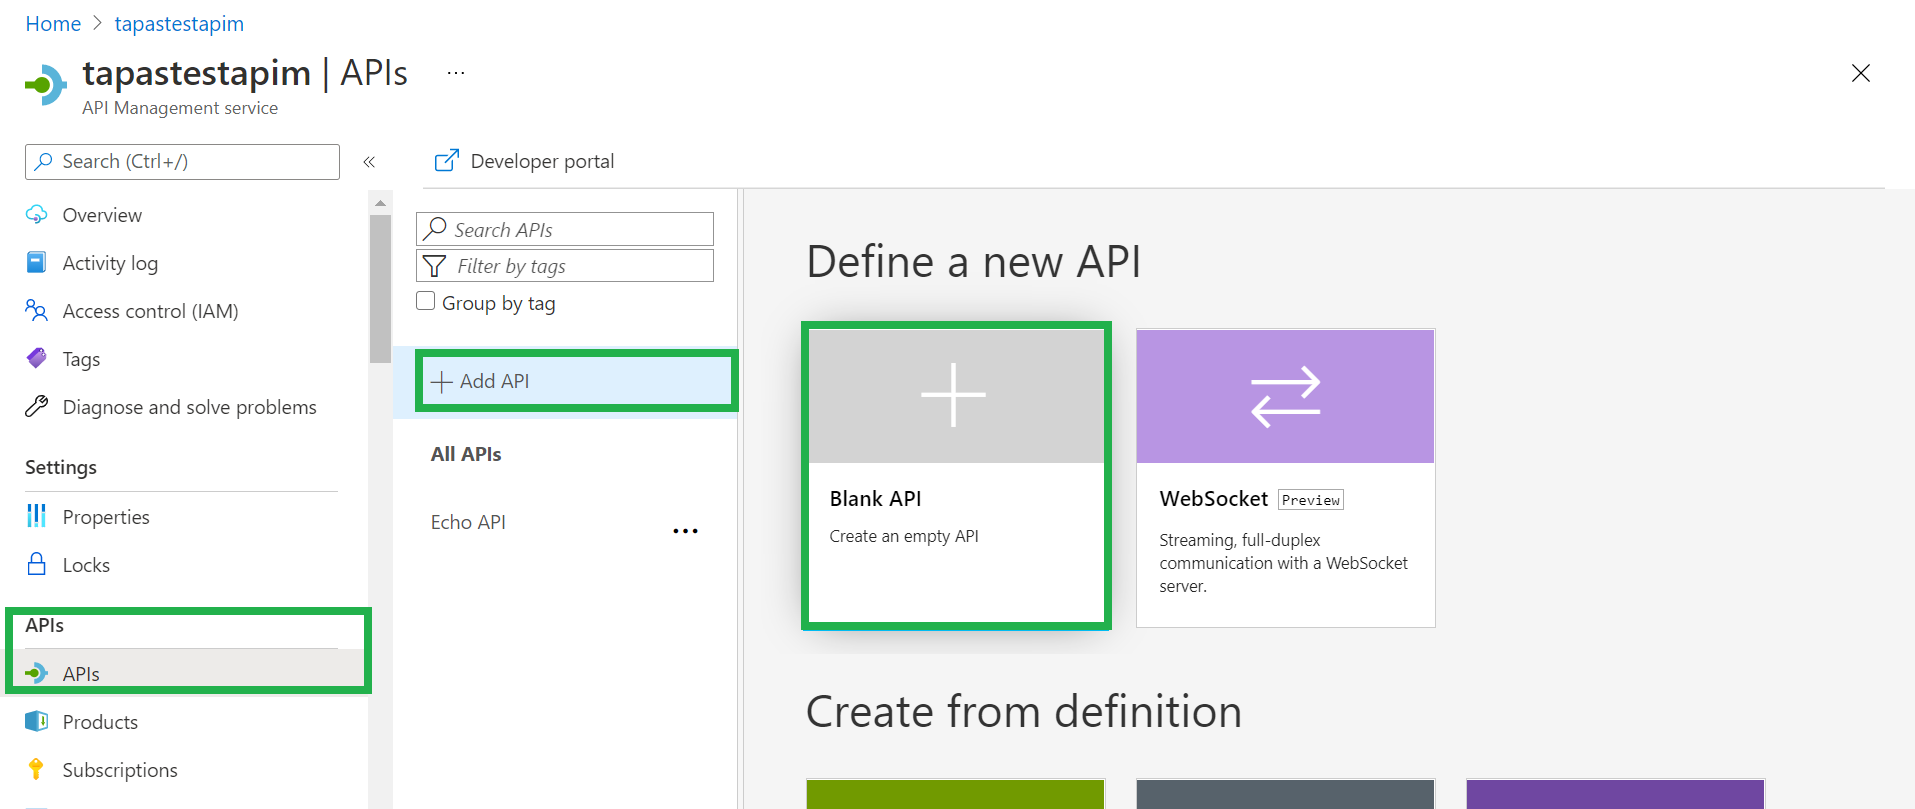 How to create a blank API in Azure